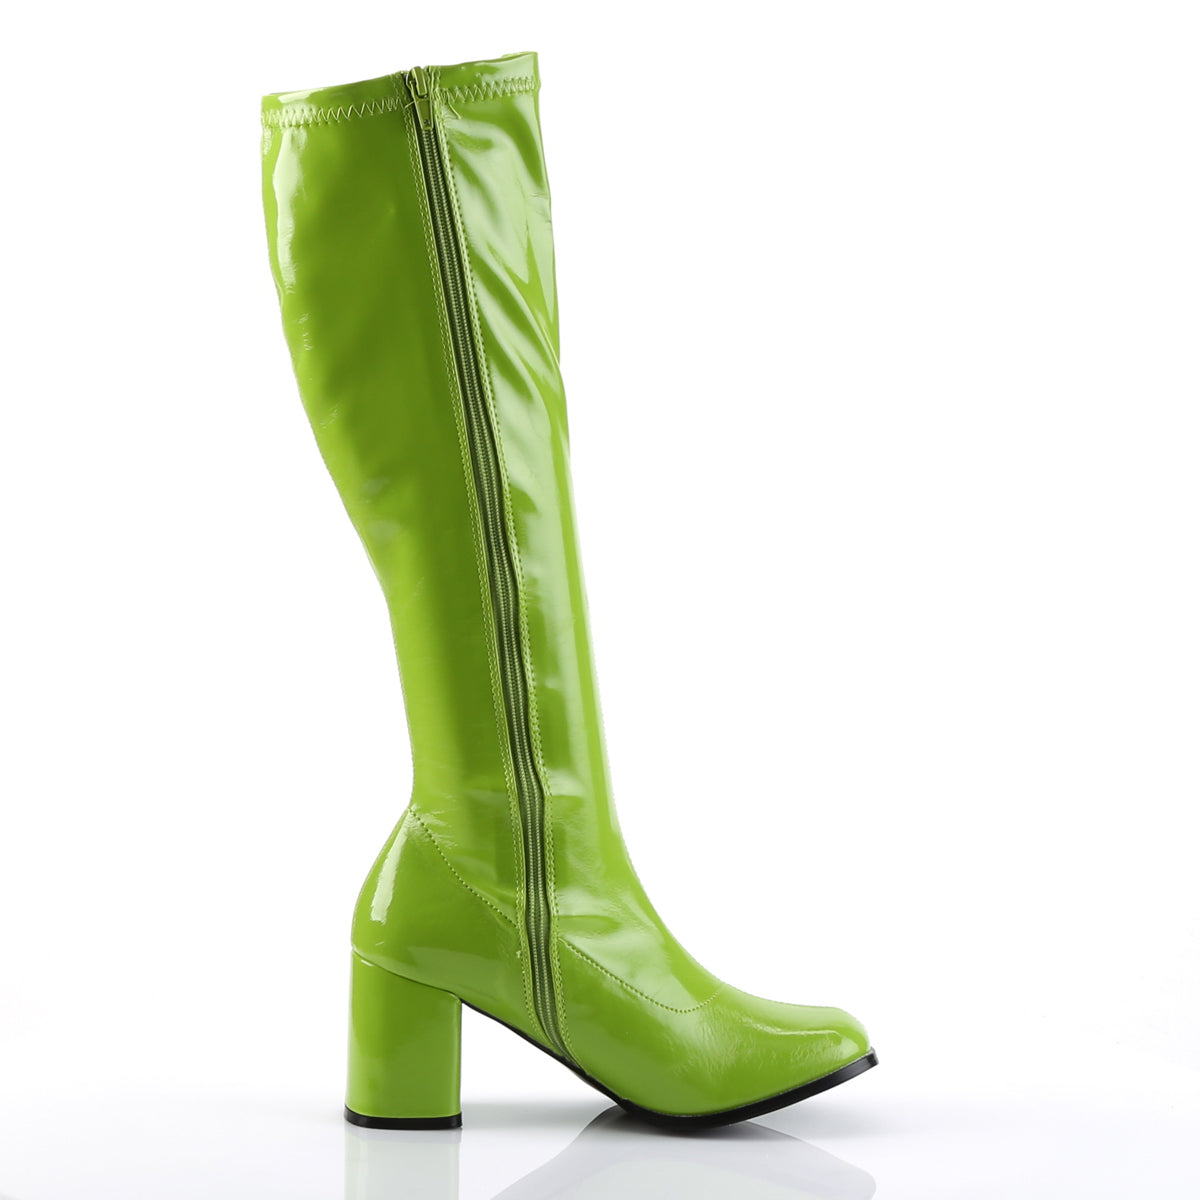 GOGO-300 3 Inch Heel Lime Green Women's Boots Funtasma Costume Shoes Fancy Dress